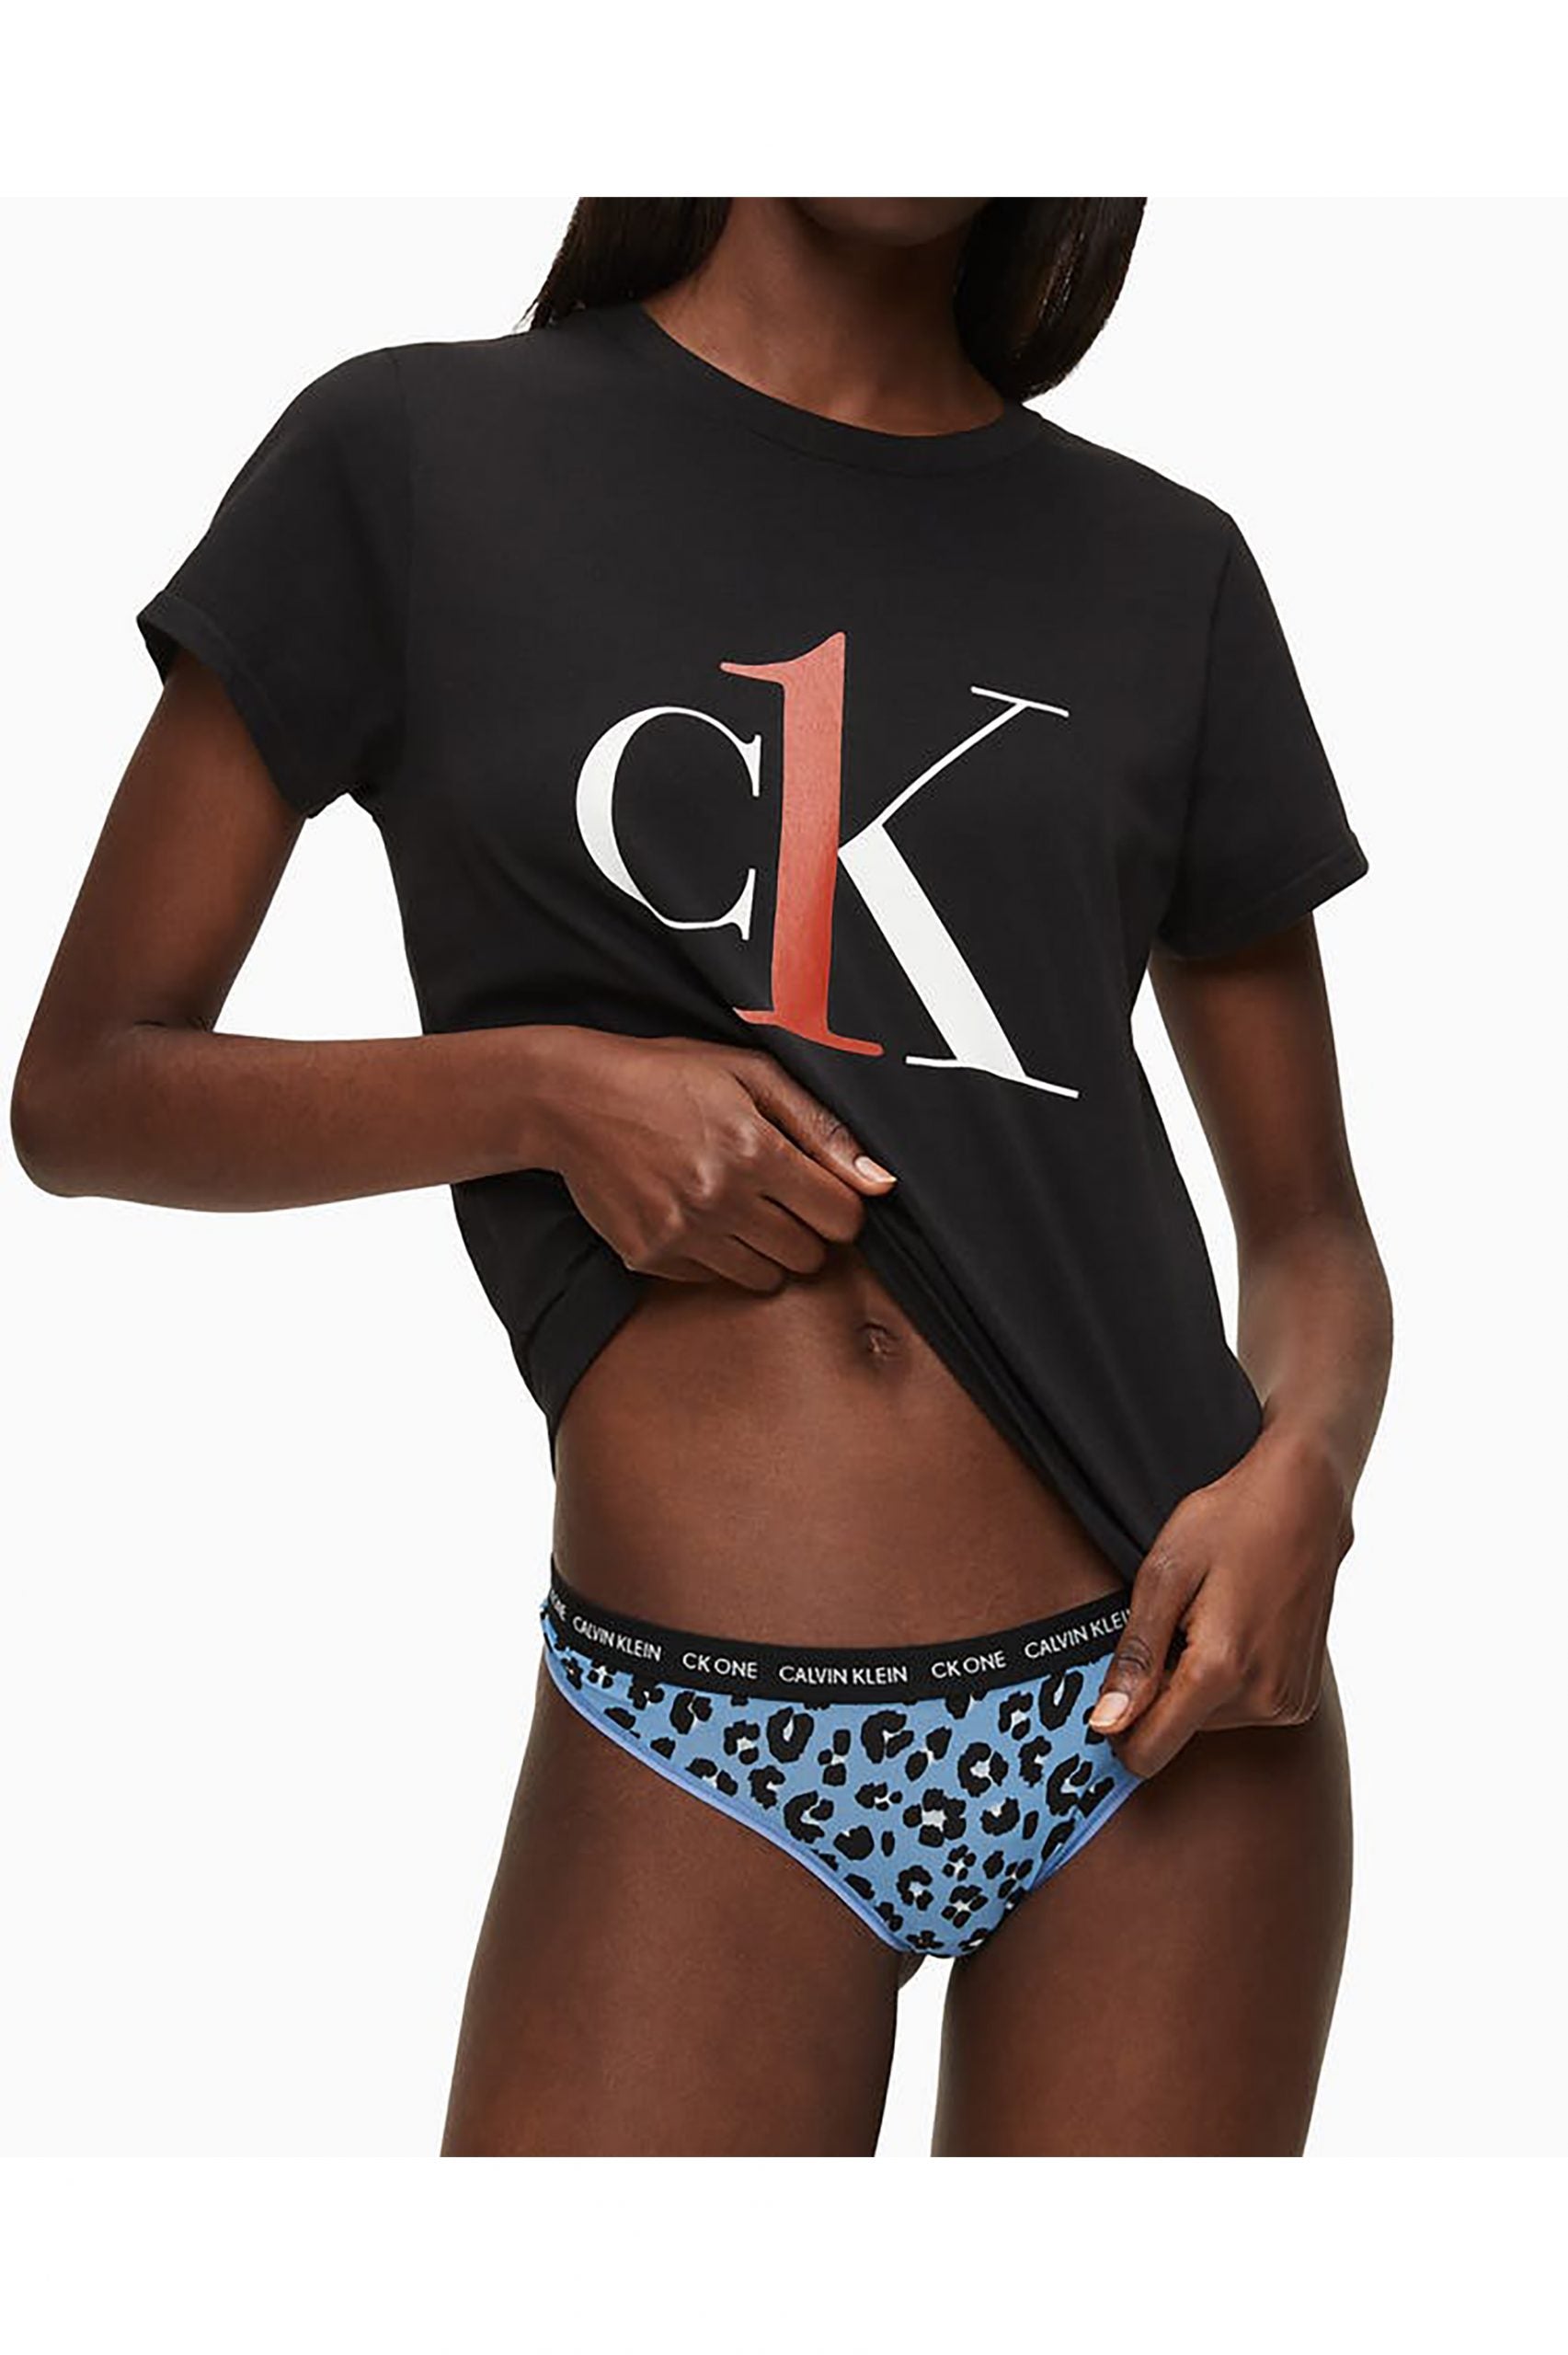 Calvin Klein CK One Cotton Micro Thong - Leopard Azure